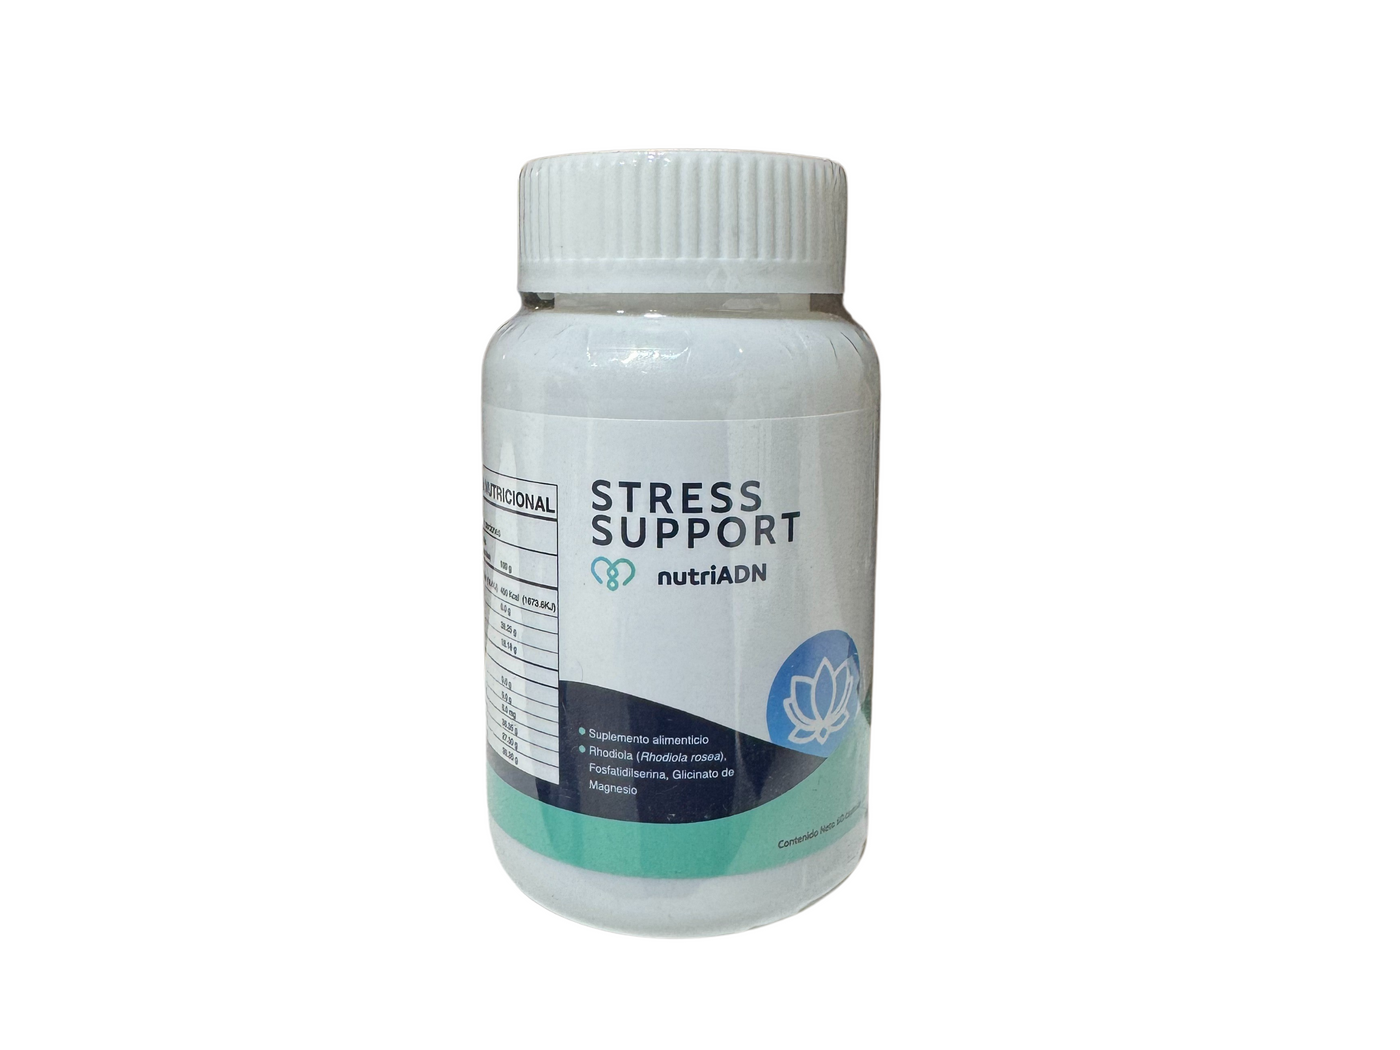 Stress Support by NutriADN